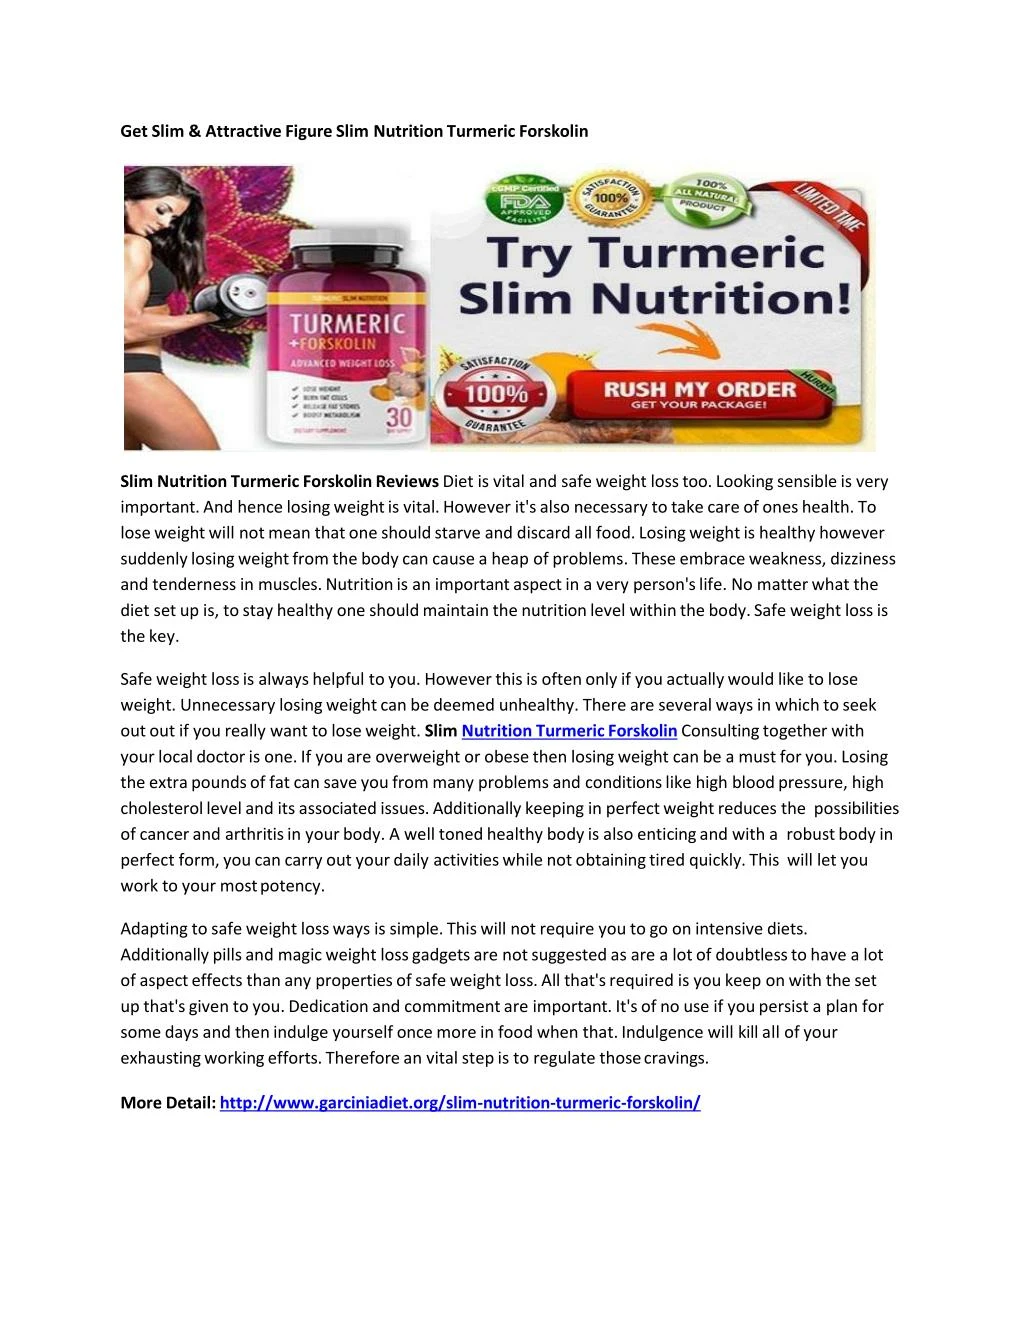 get slim attractive figure slim nutrition